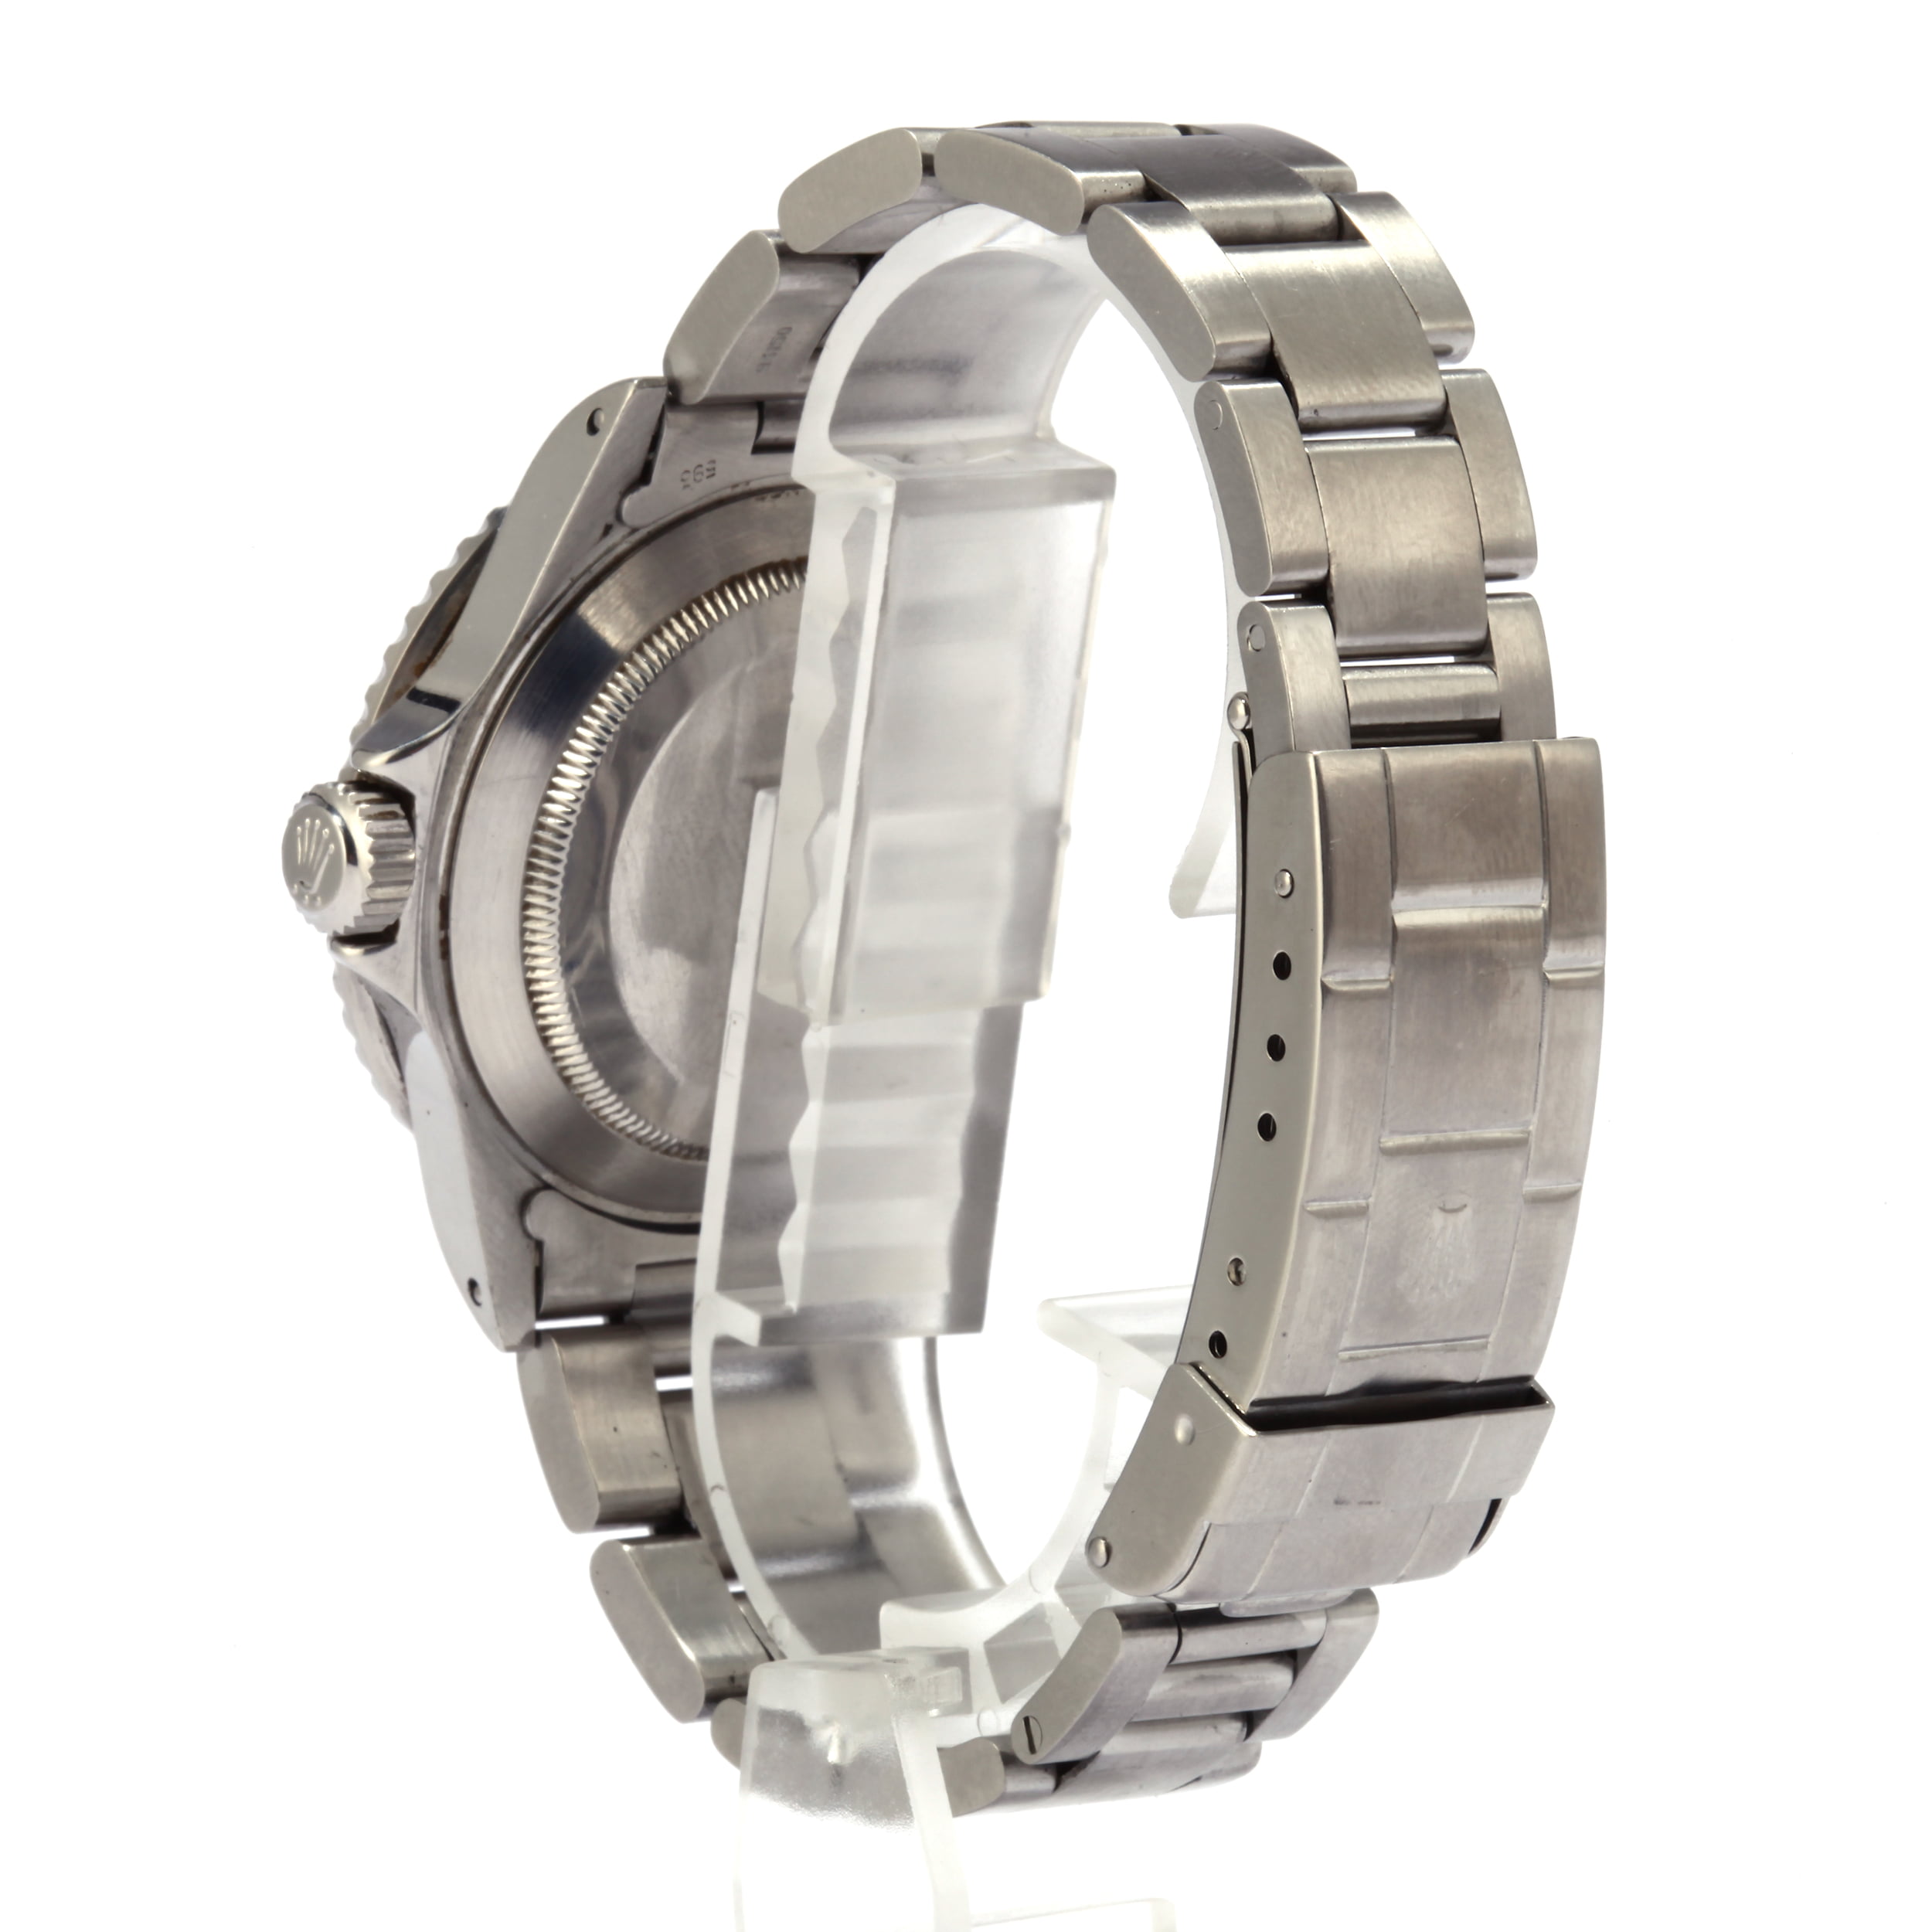 Buy Used Rolex Submariner 16800 | Bob's Watches - Sku: 127554